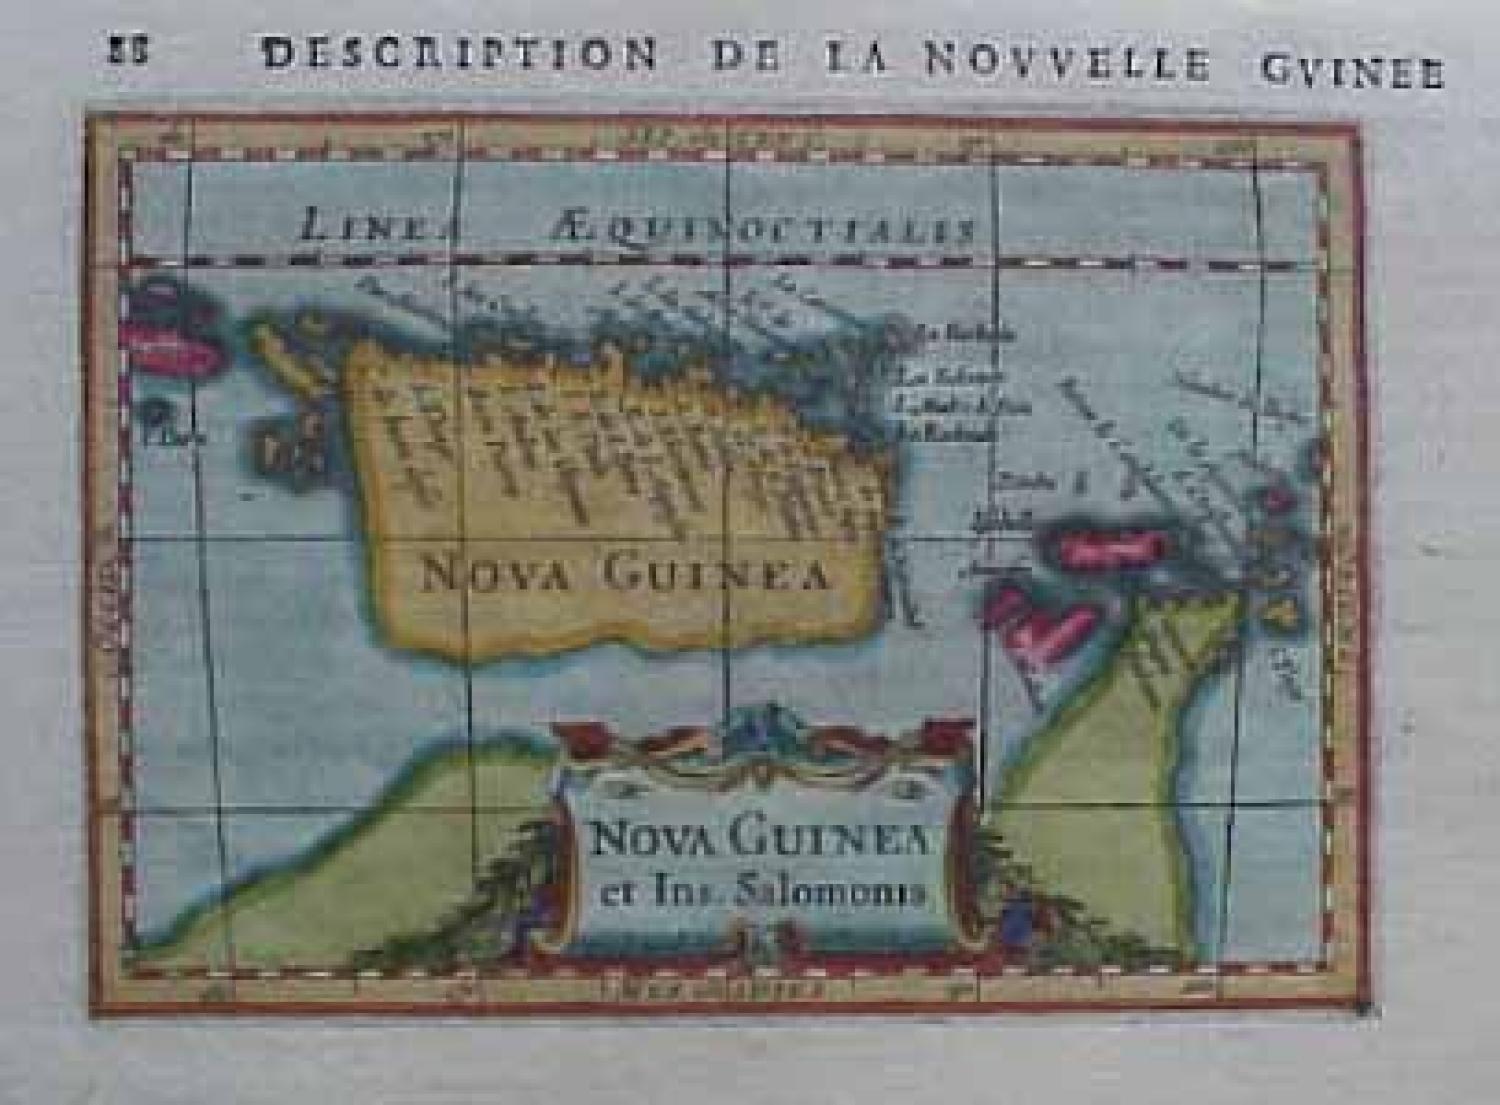 SOLD Nova Guinea et Ins. Salomonis